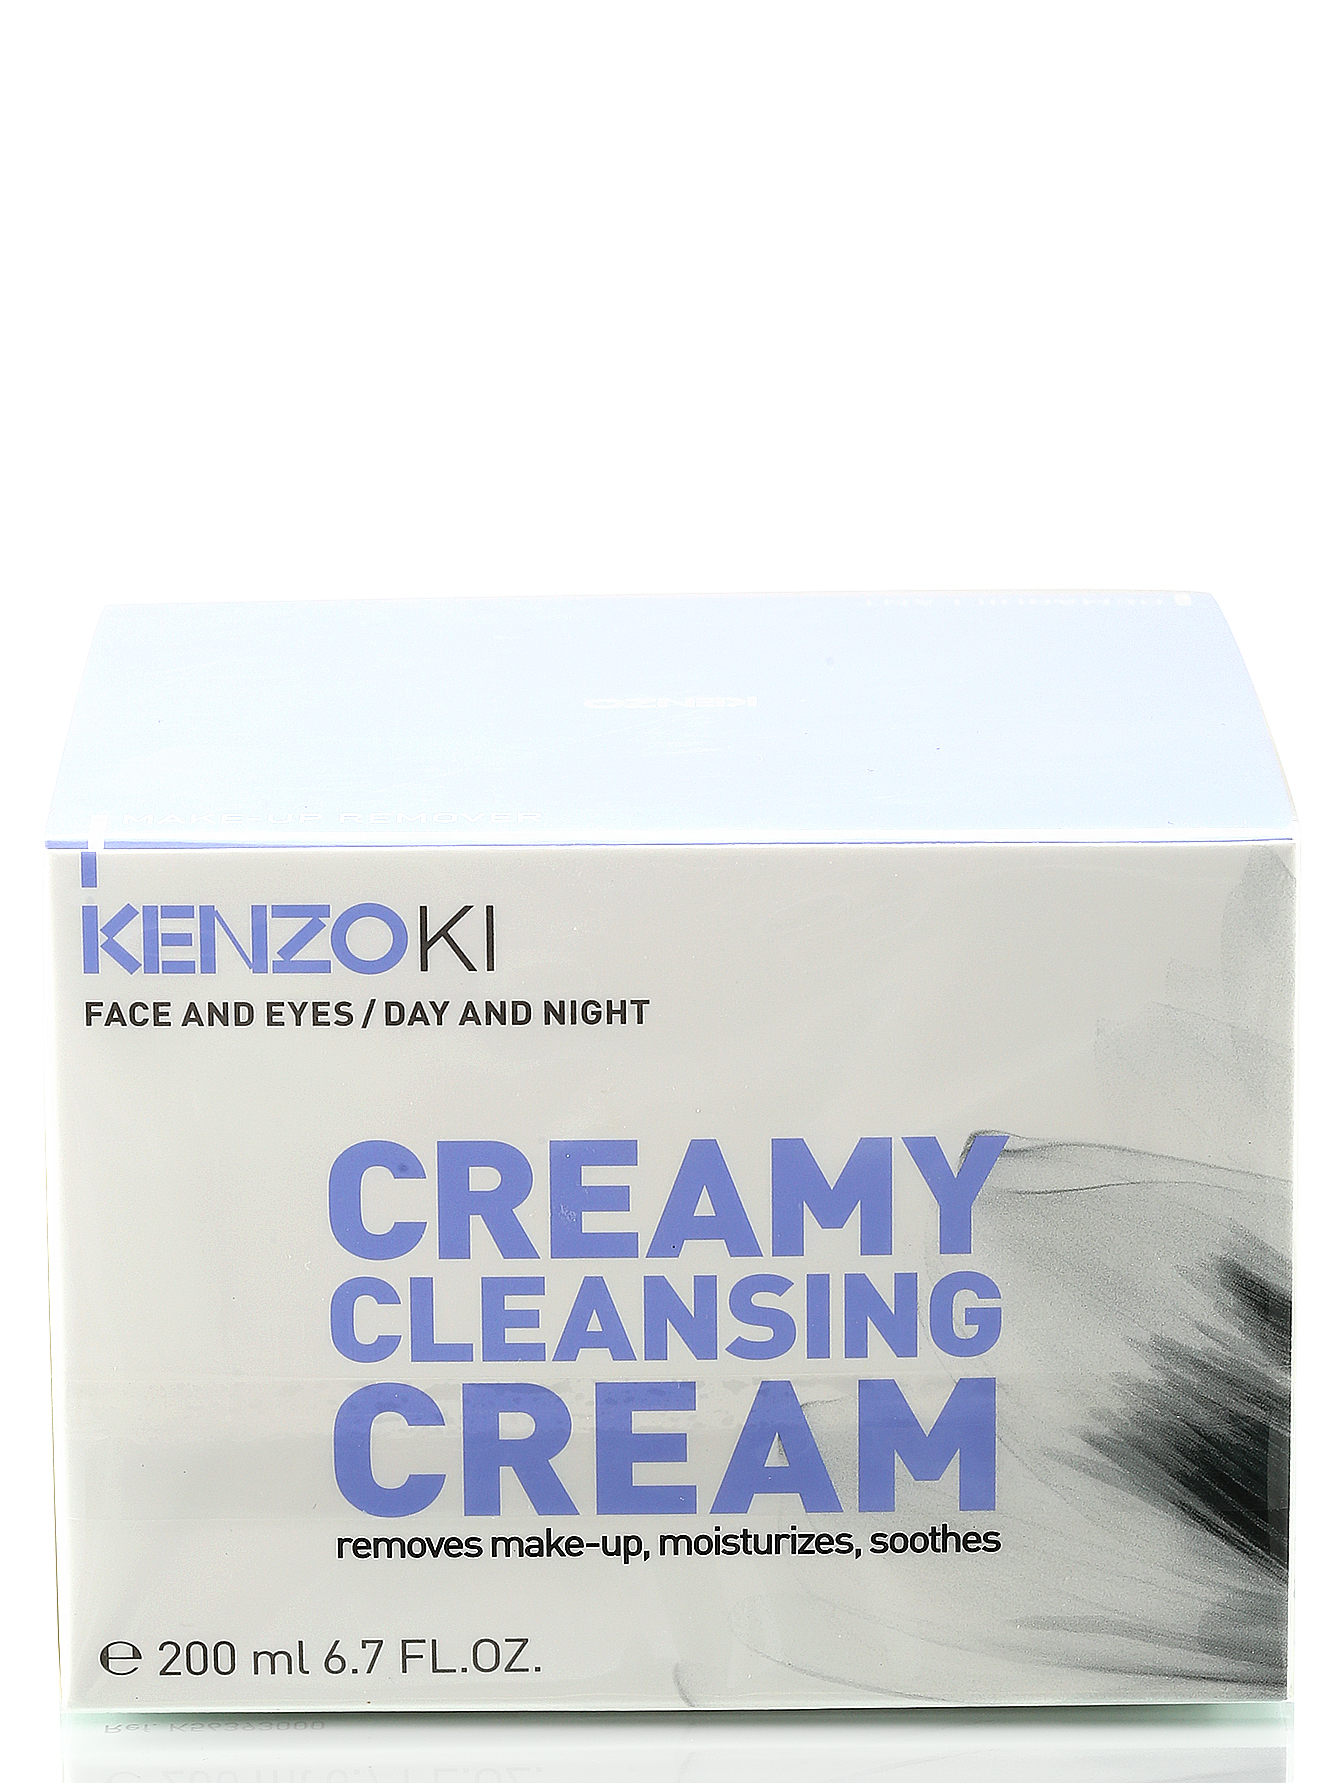 Крем для снятия макияжа - Kenzoki, 200ml - Модель Верх-Низ